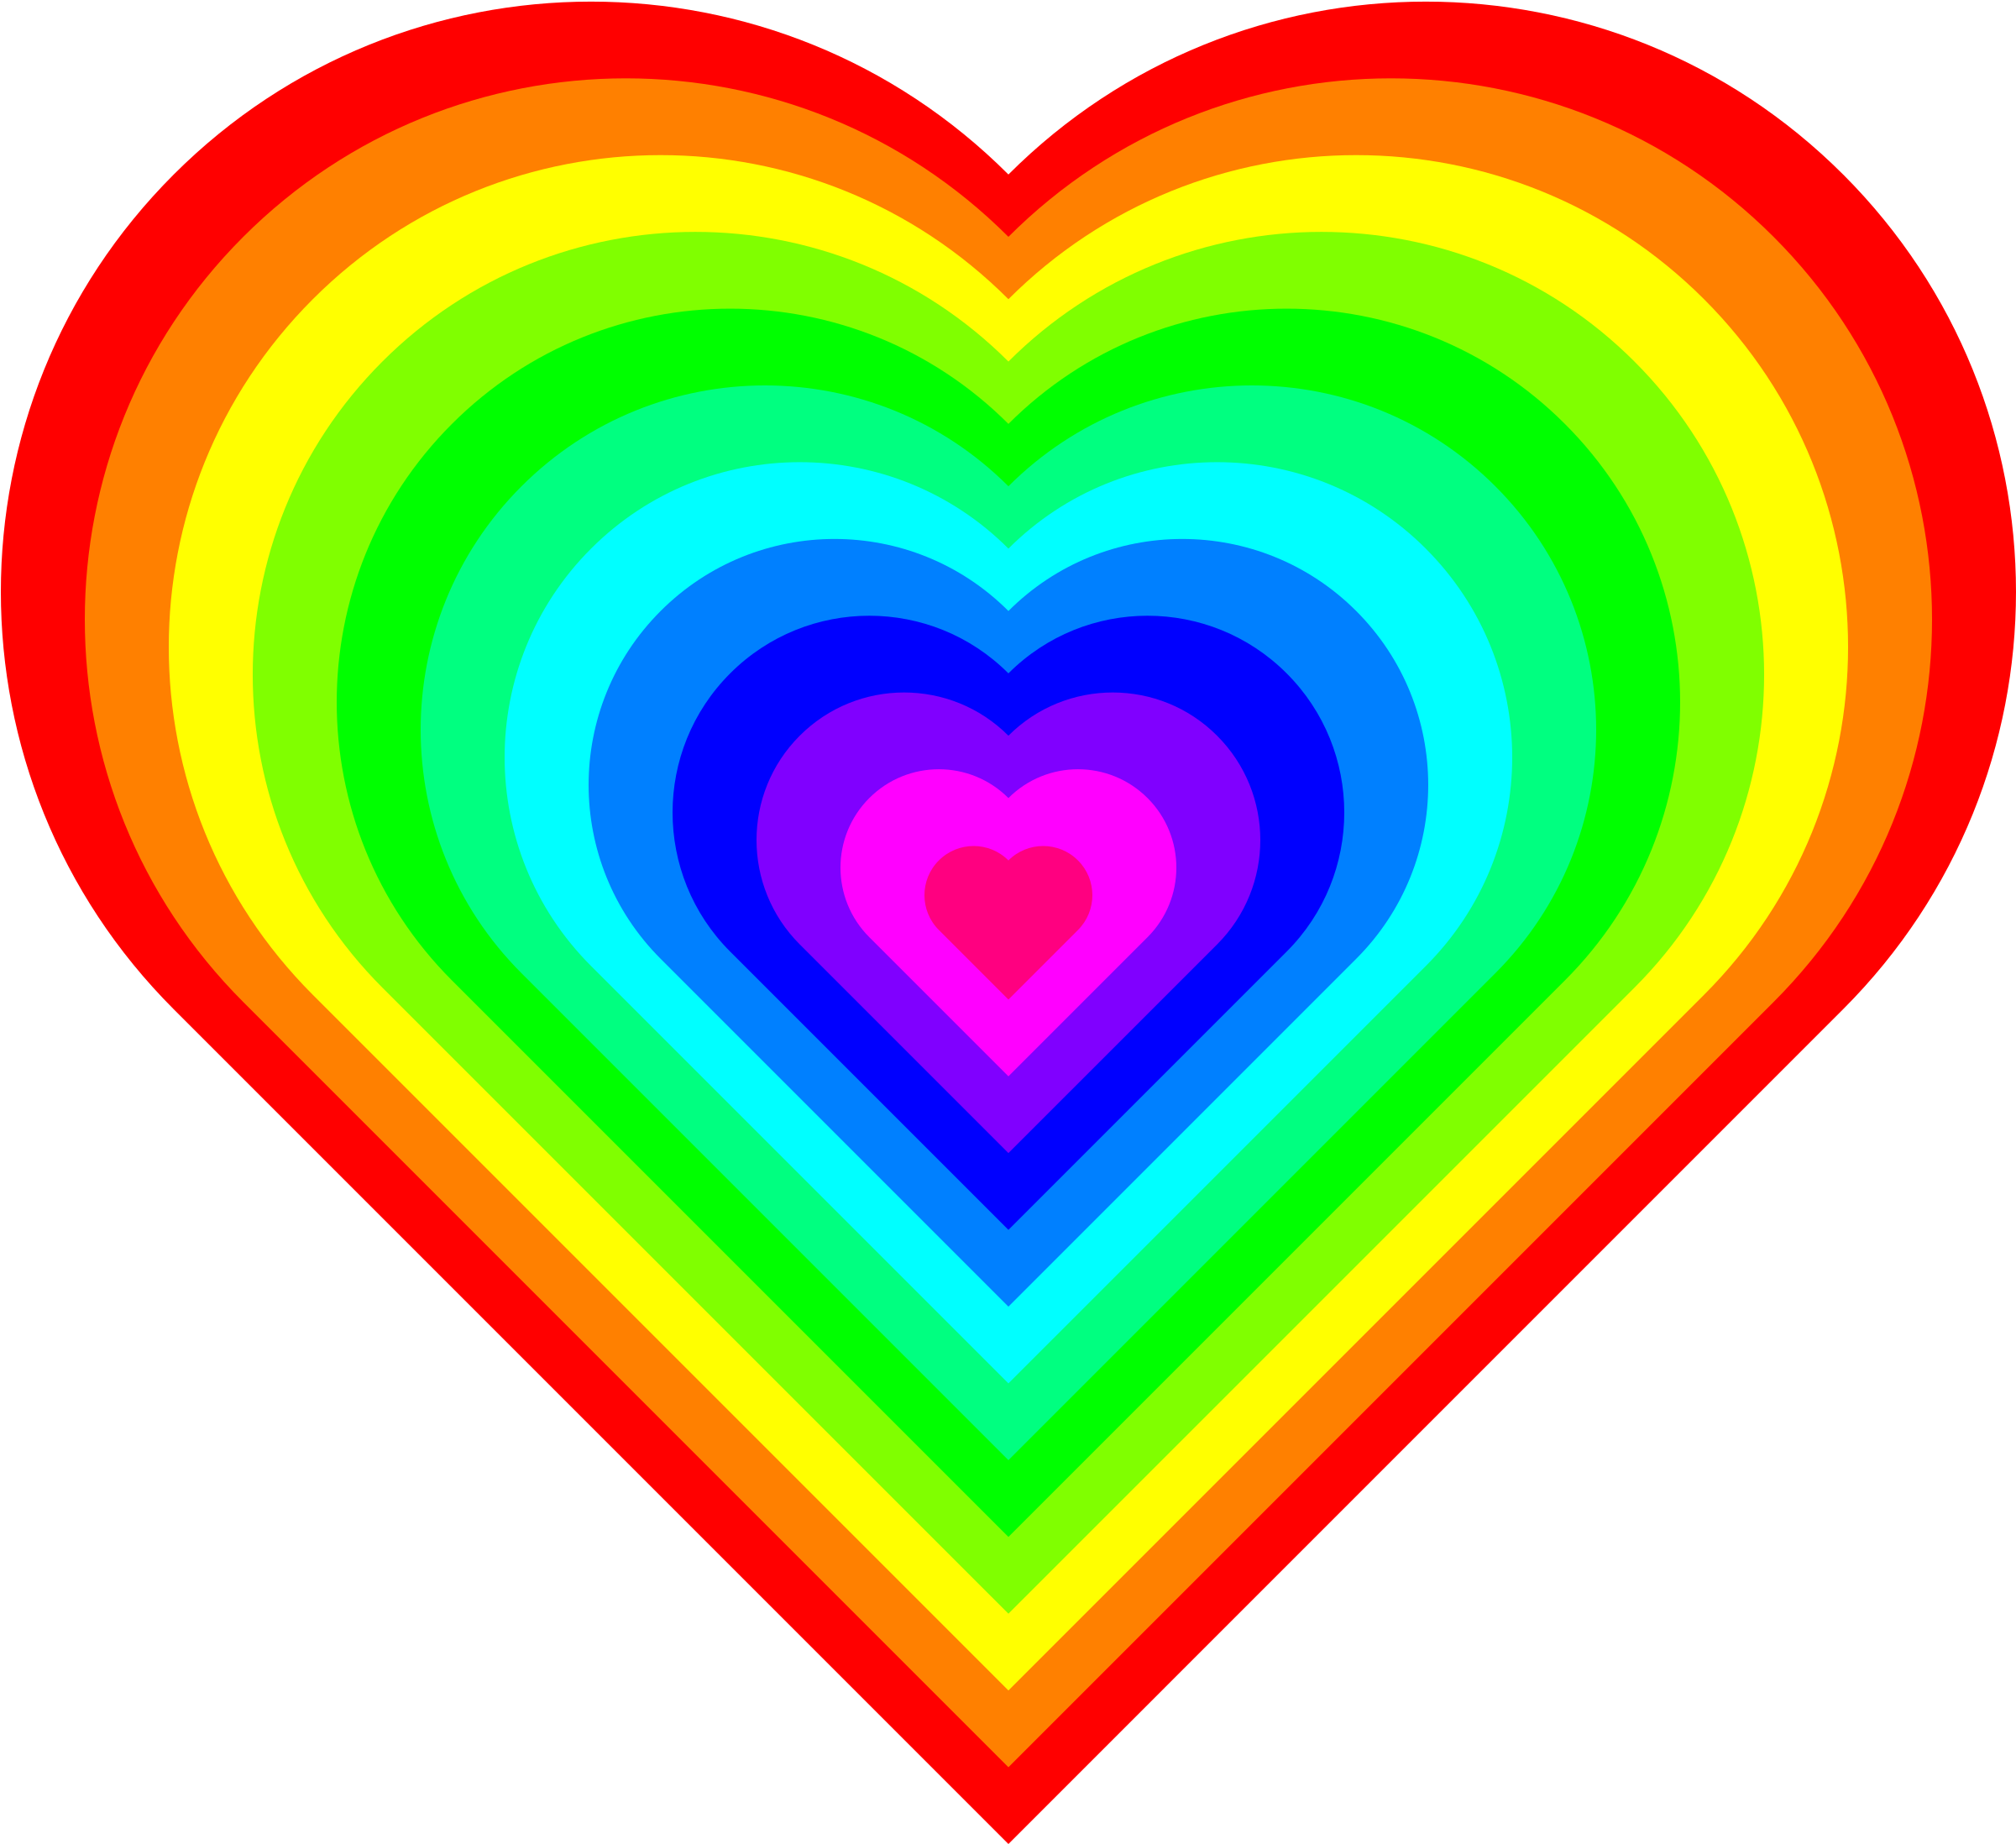 12 Color Heart - Hearts Rainbow (2400x2400)